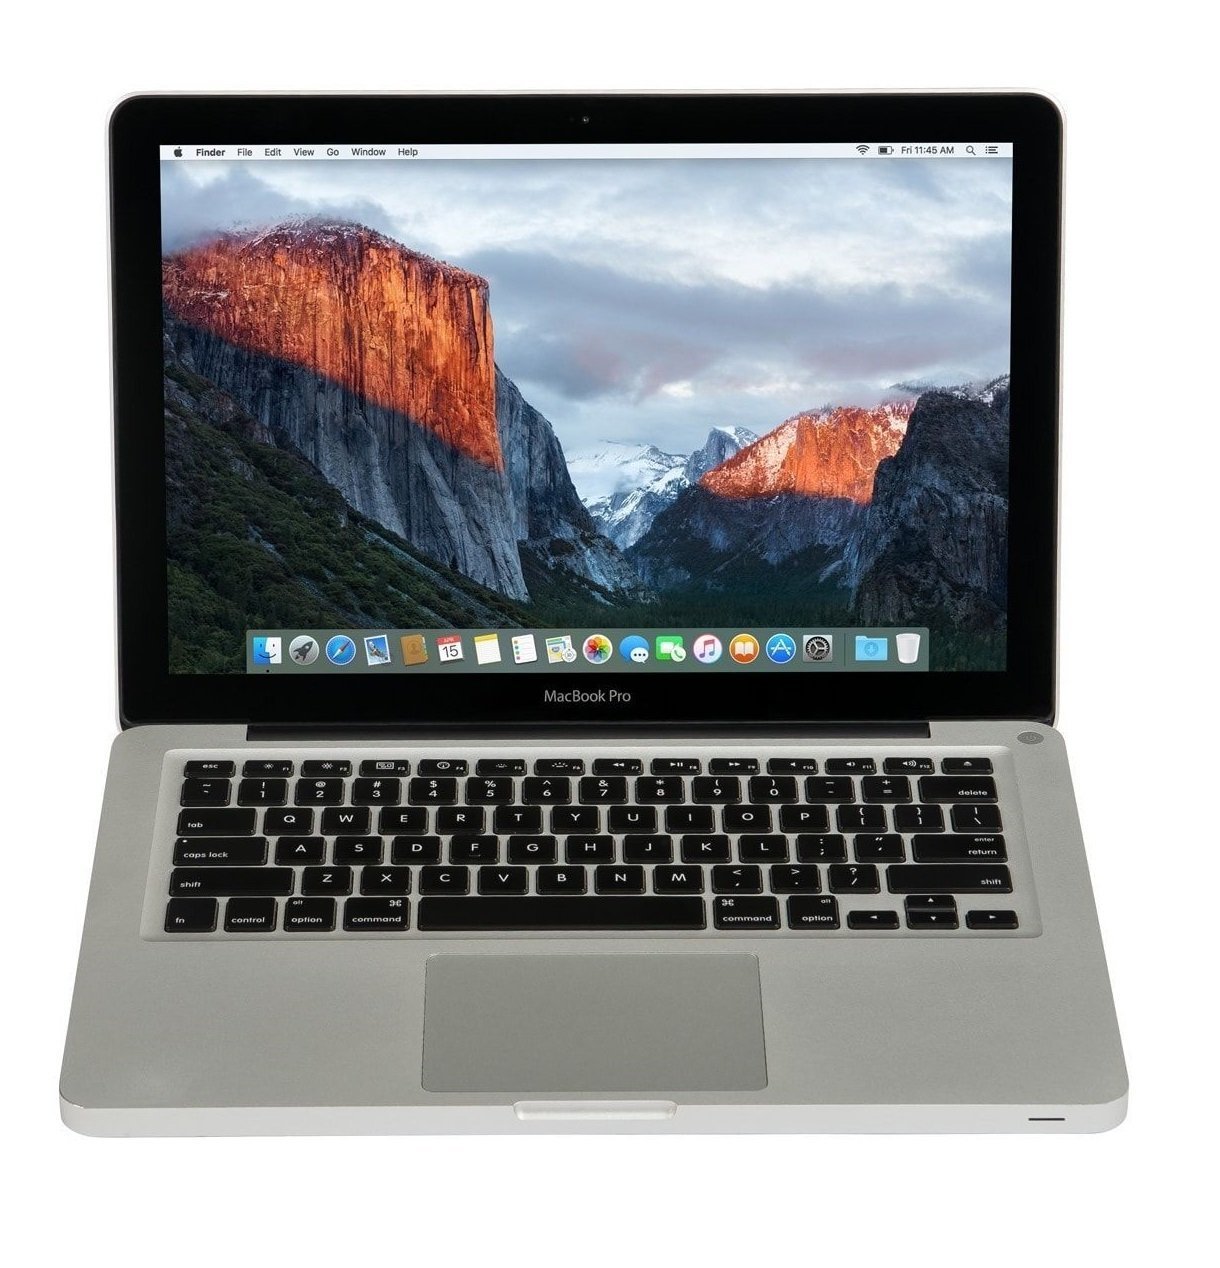 Apple MacBook Pro Core i7-2620M Dual-Core 2.7GHz 4GB 500GB DVD±RW 13.3" Notebook (Early 2011) - B